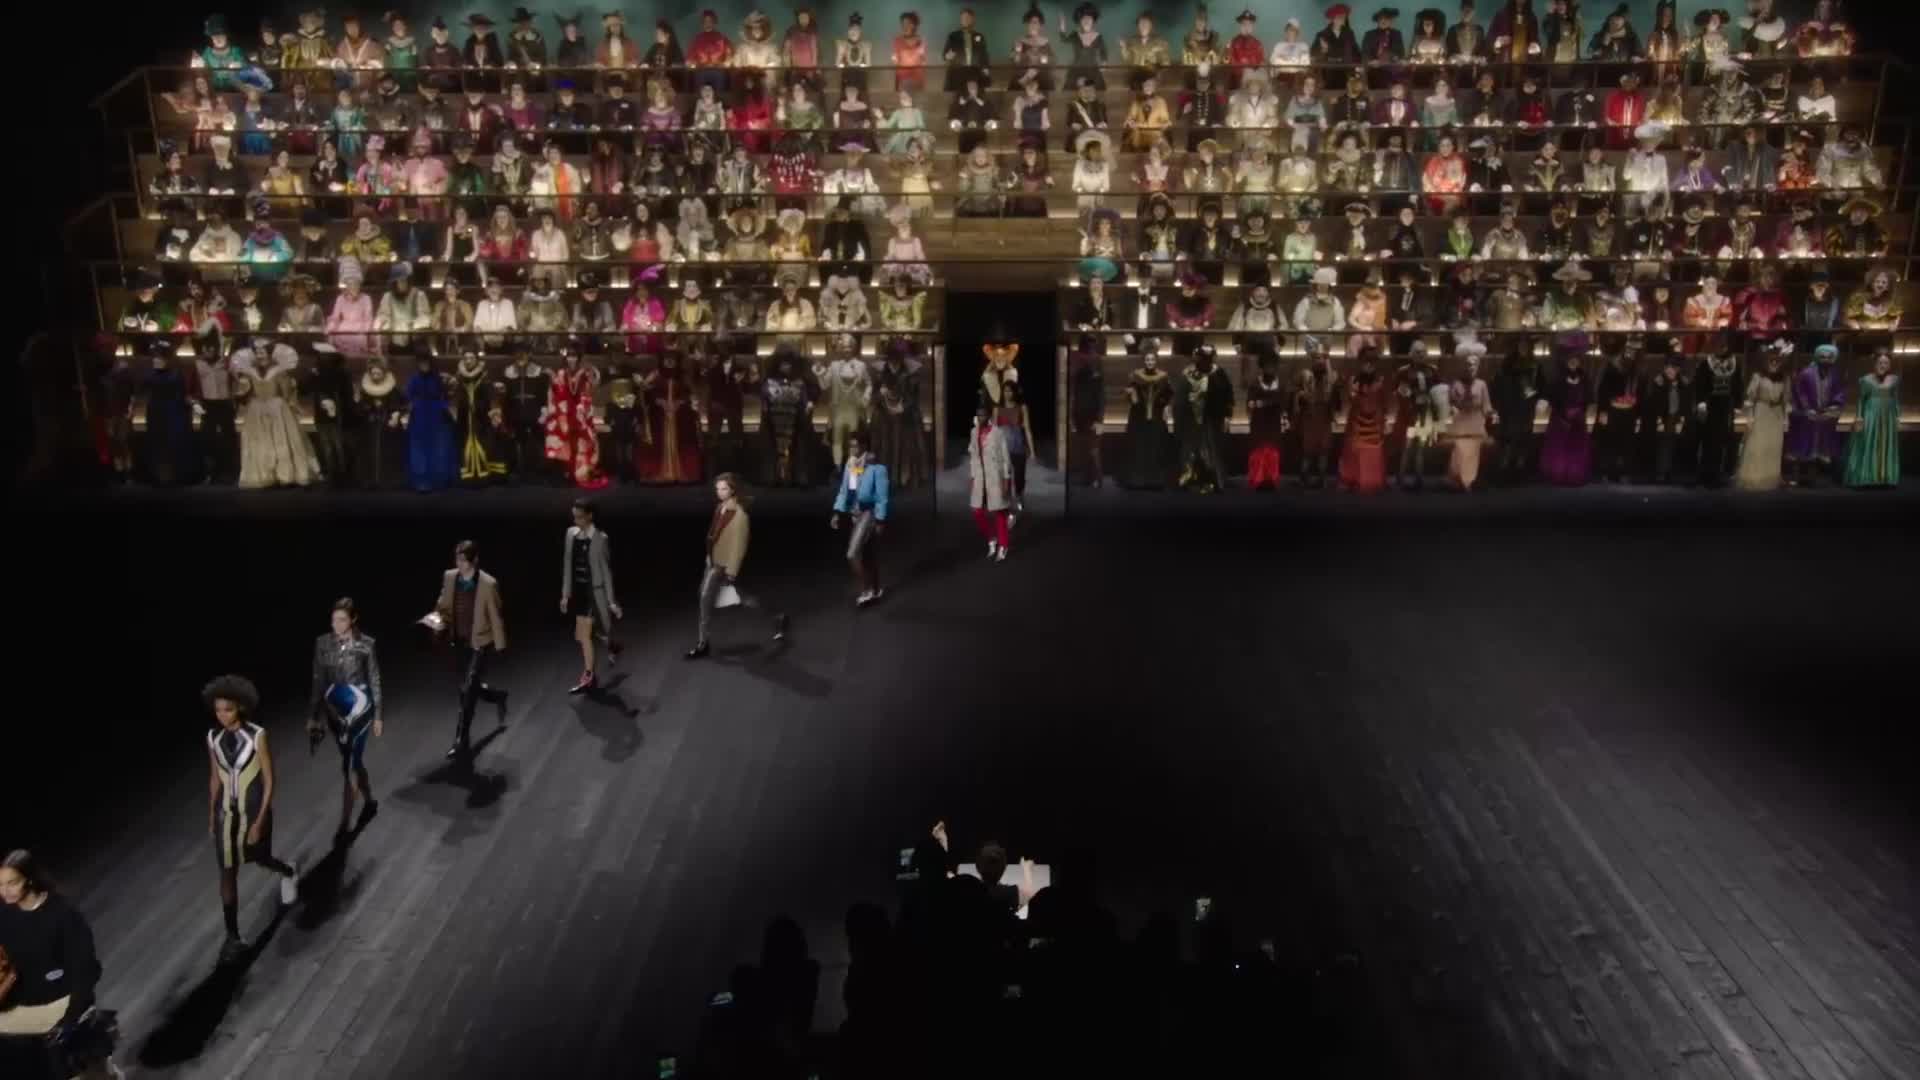 Watch How the Tableau Vivant at Louis Vuitton's Fall Show Got Made